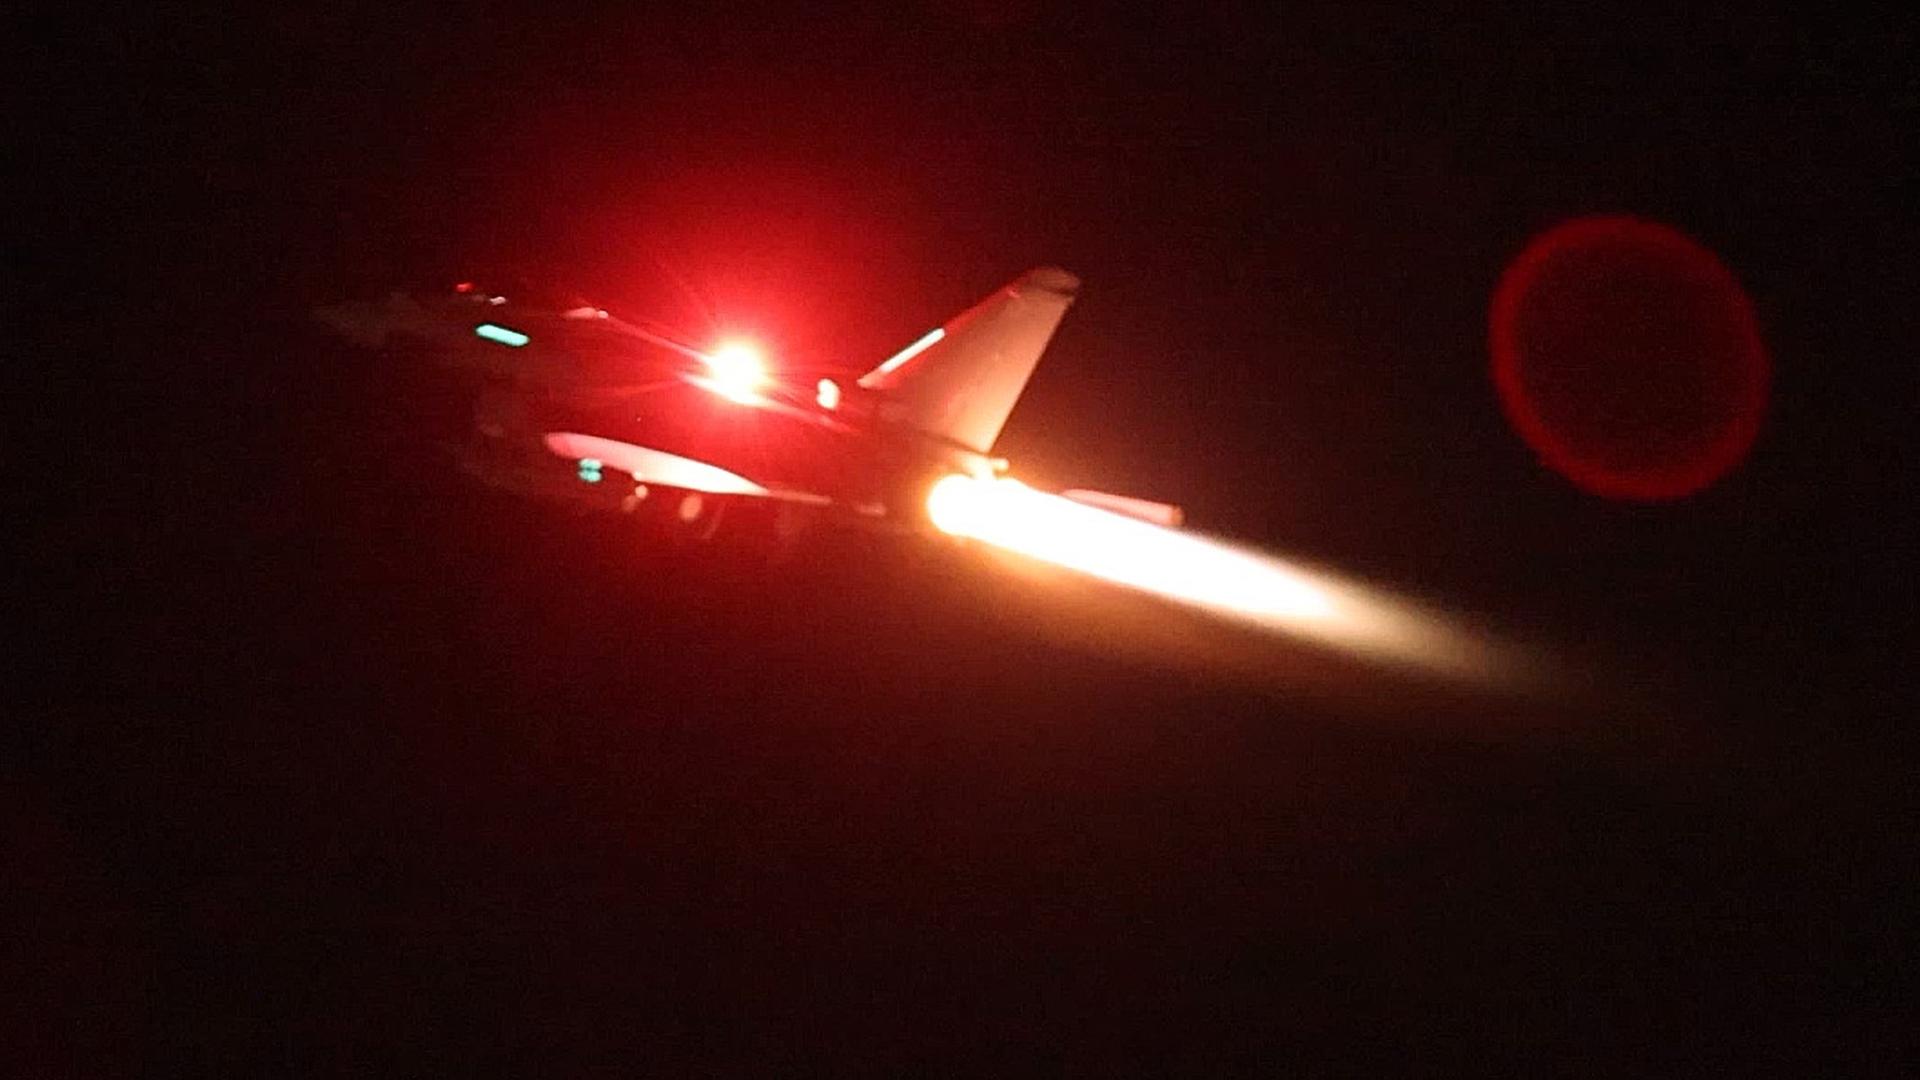 Ein Kampfjet startet vor dunklem Nachthimmel